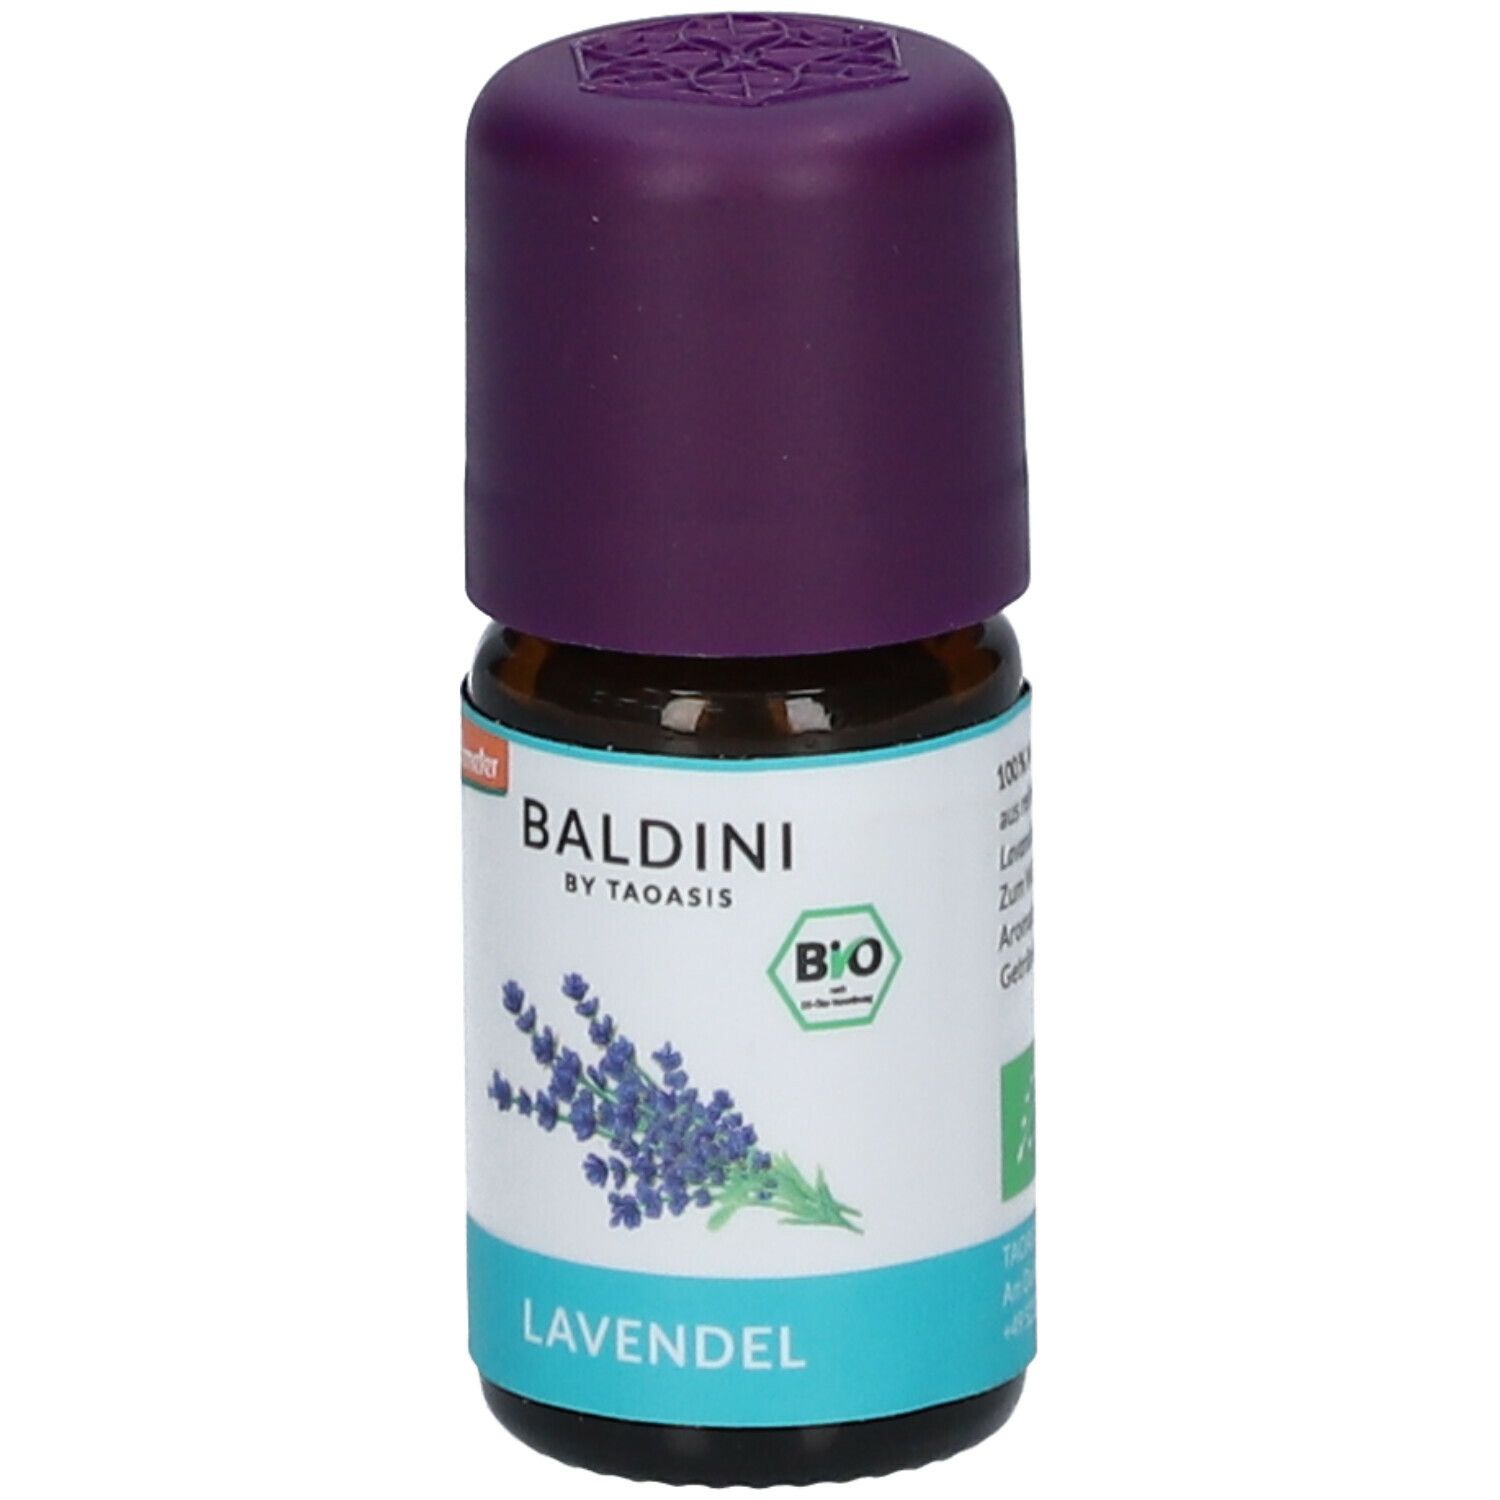 BALDINI BY TAOASIS Lavendel Aromaöl